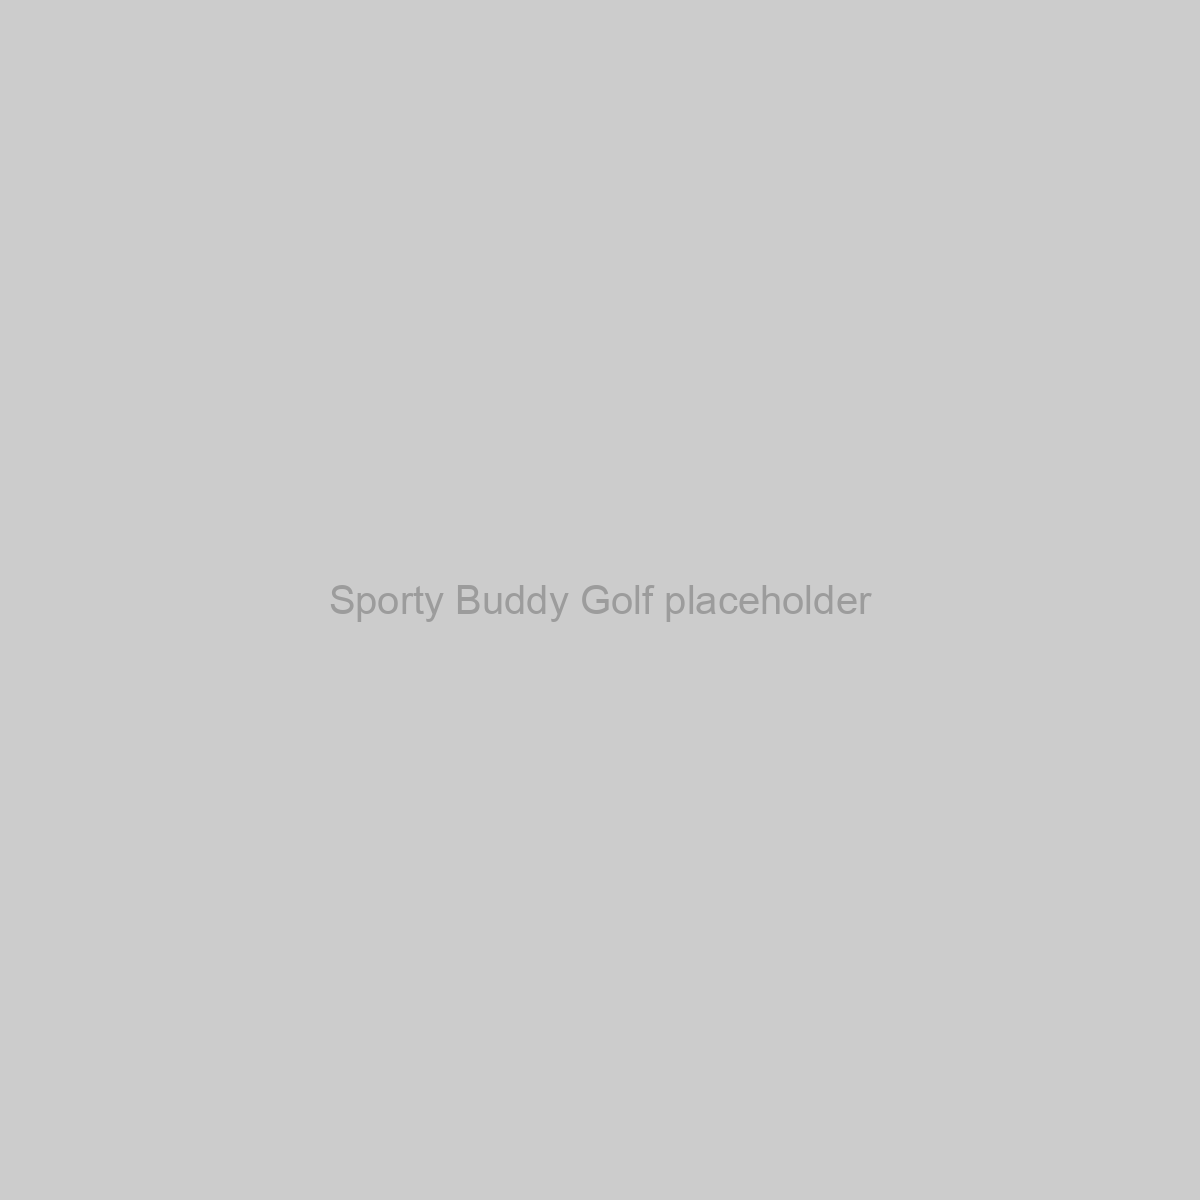 Sporty Buddy Golf Placeholder Image